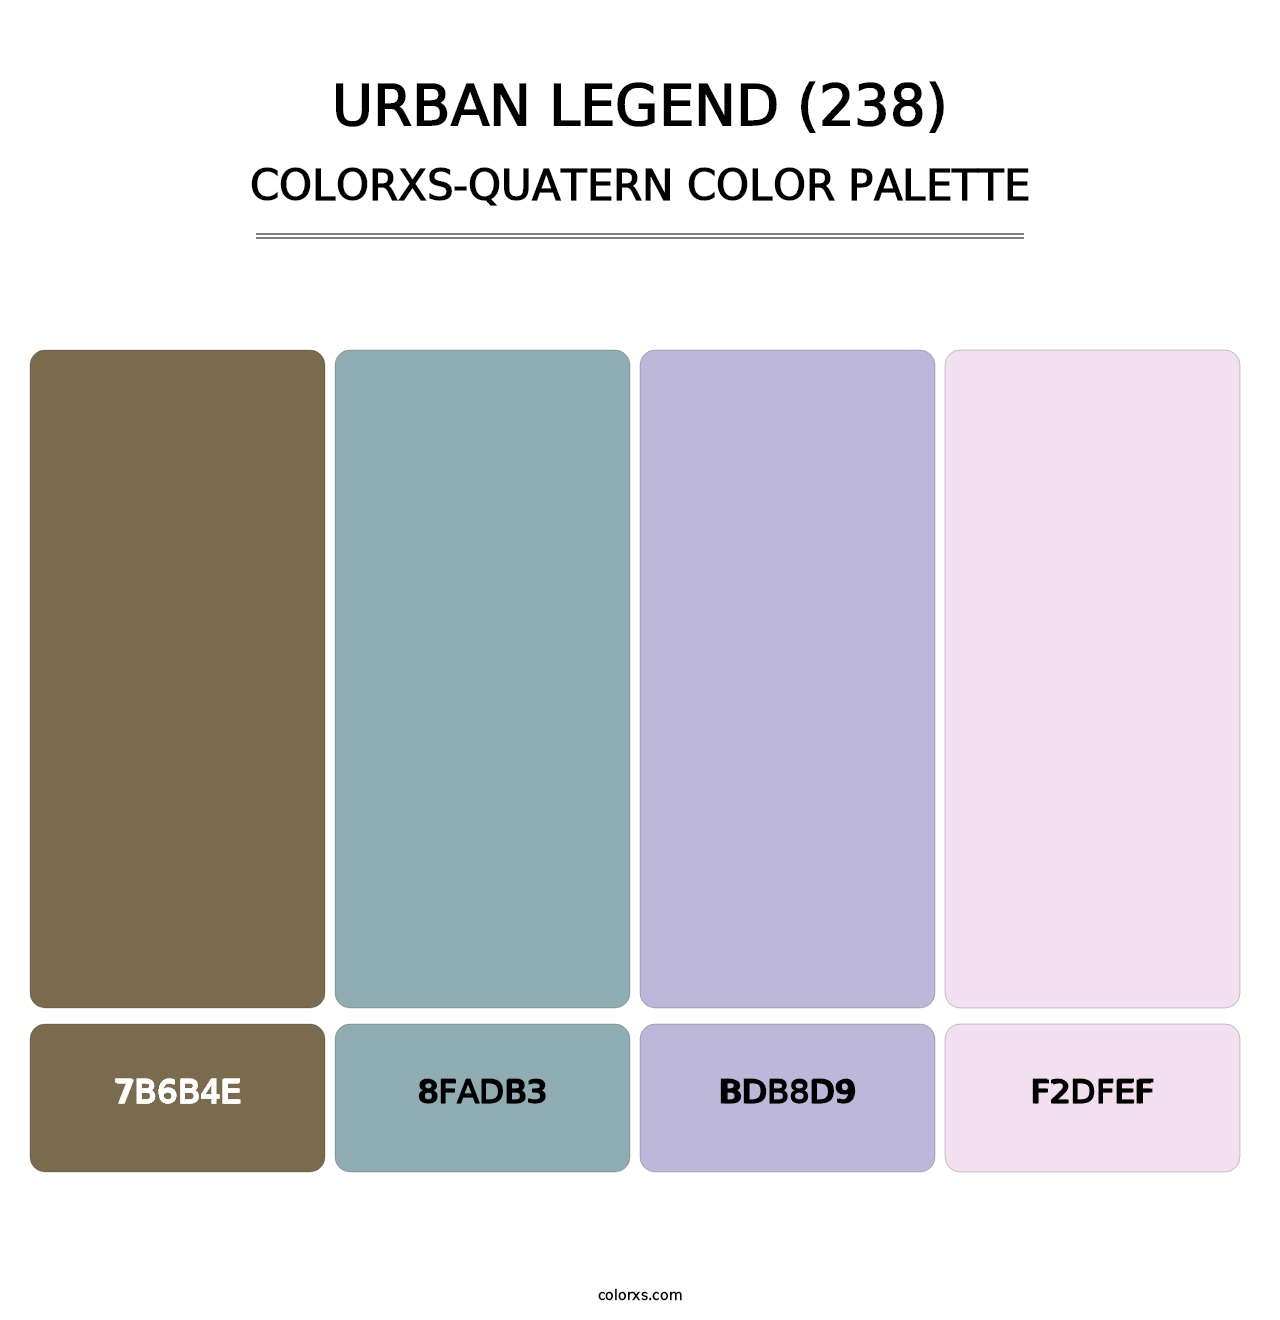 Urban Legend (238) - Colorxs Quatern Palette